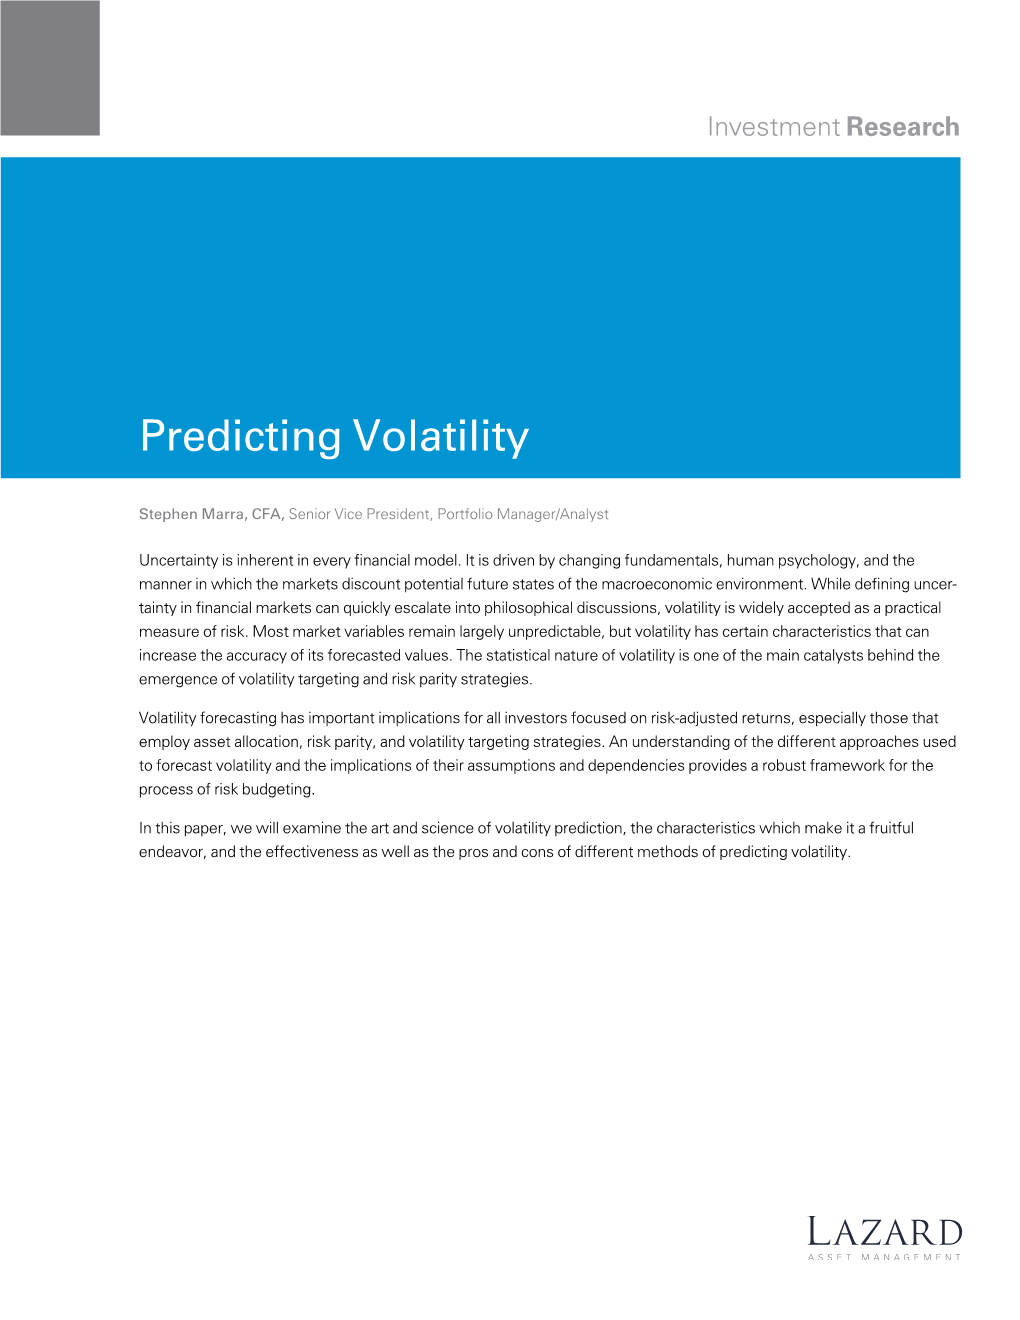 Predicting Volatility